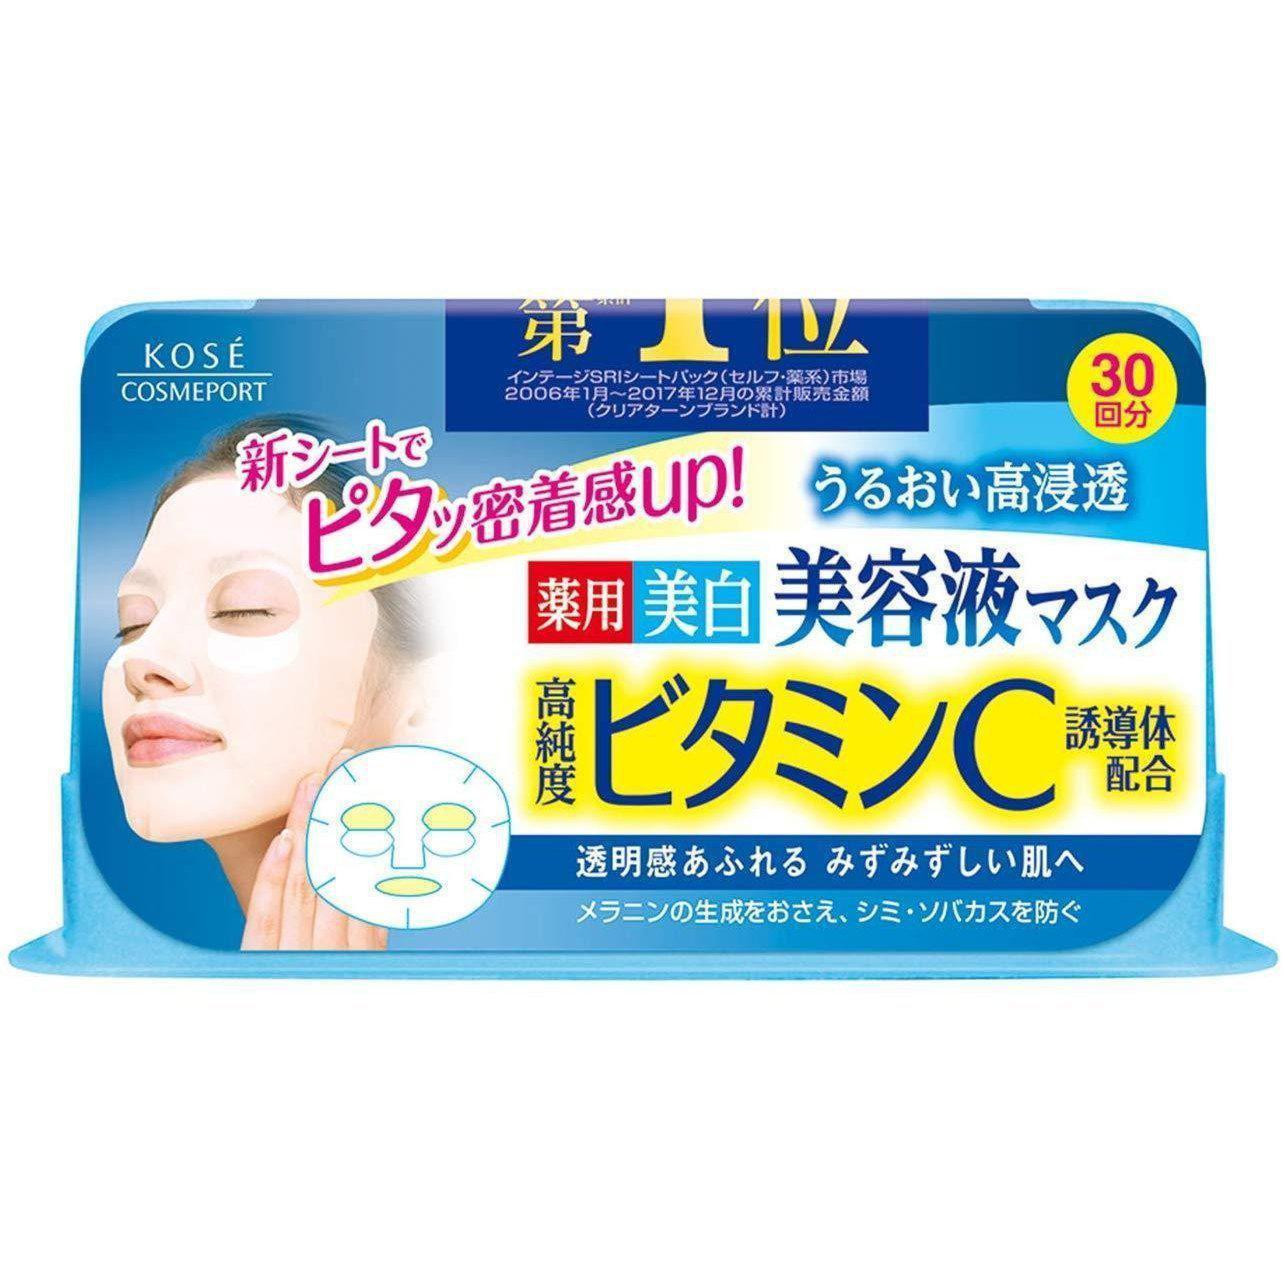 Kose Clear Turn Vitamin C Mask (Moisturizing Face Mask) 30 Sheets